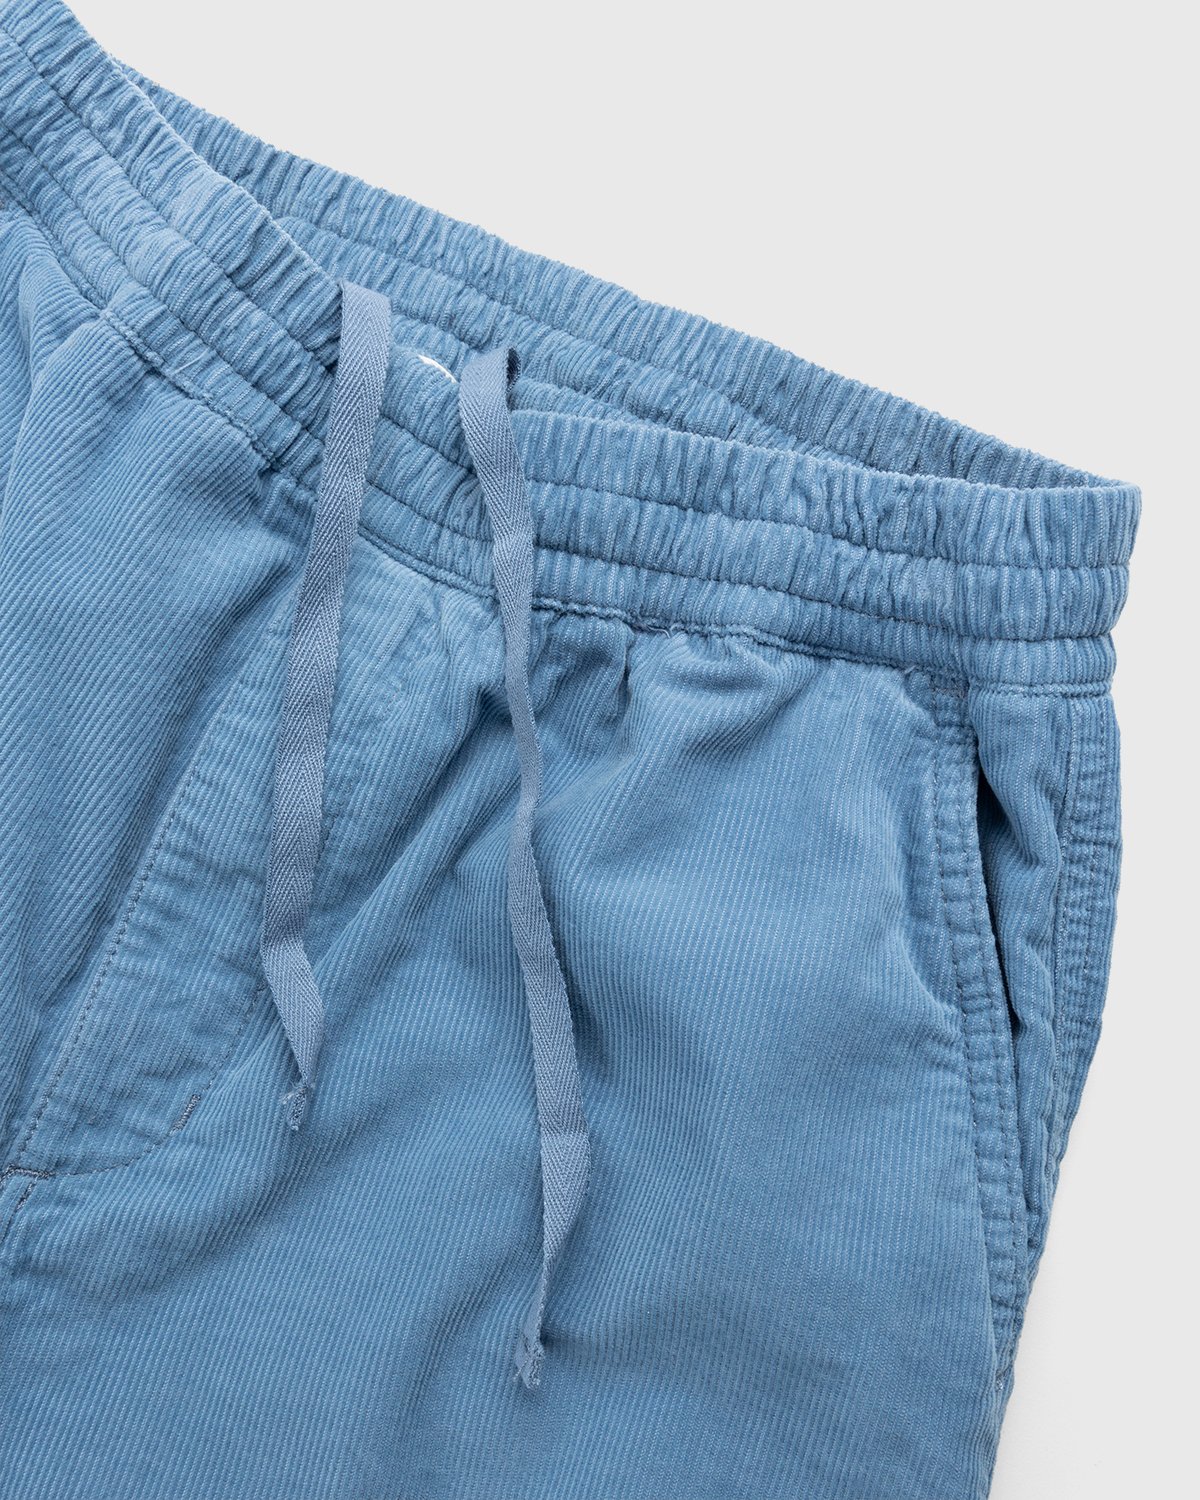 Carhartt WIP - Flint Pant Icy Water Rinsed - Clothing - Blue - Image 3